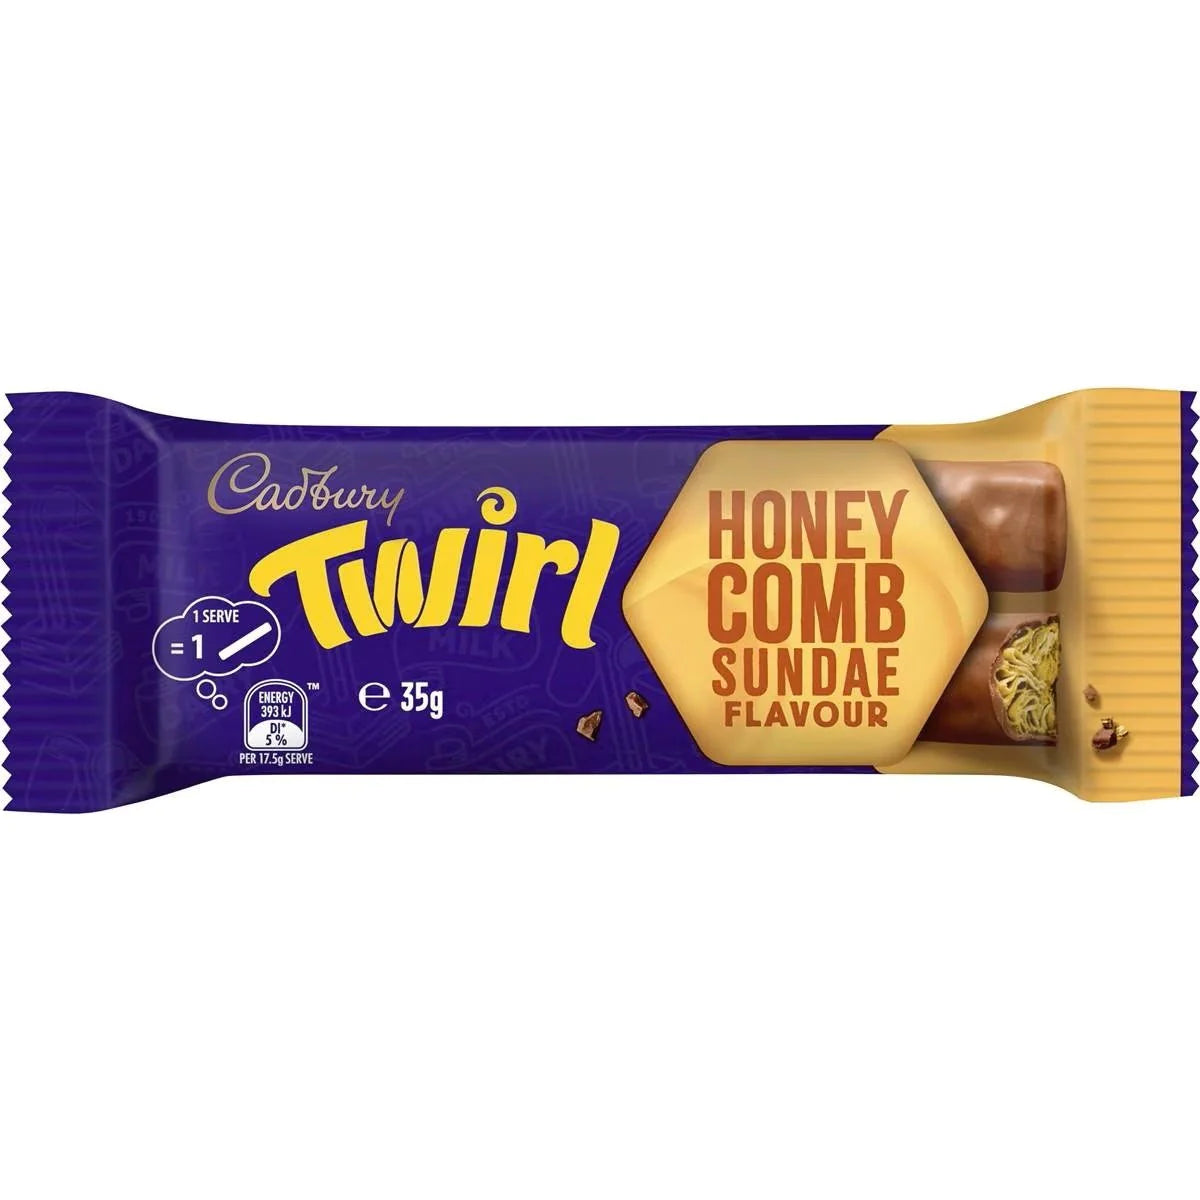 Cadbury Twirl Honeycomb Sundae Flavour (Australian Import) 35g